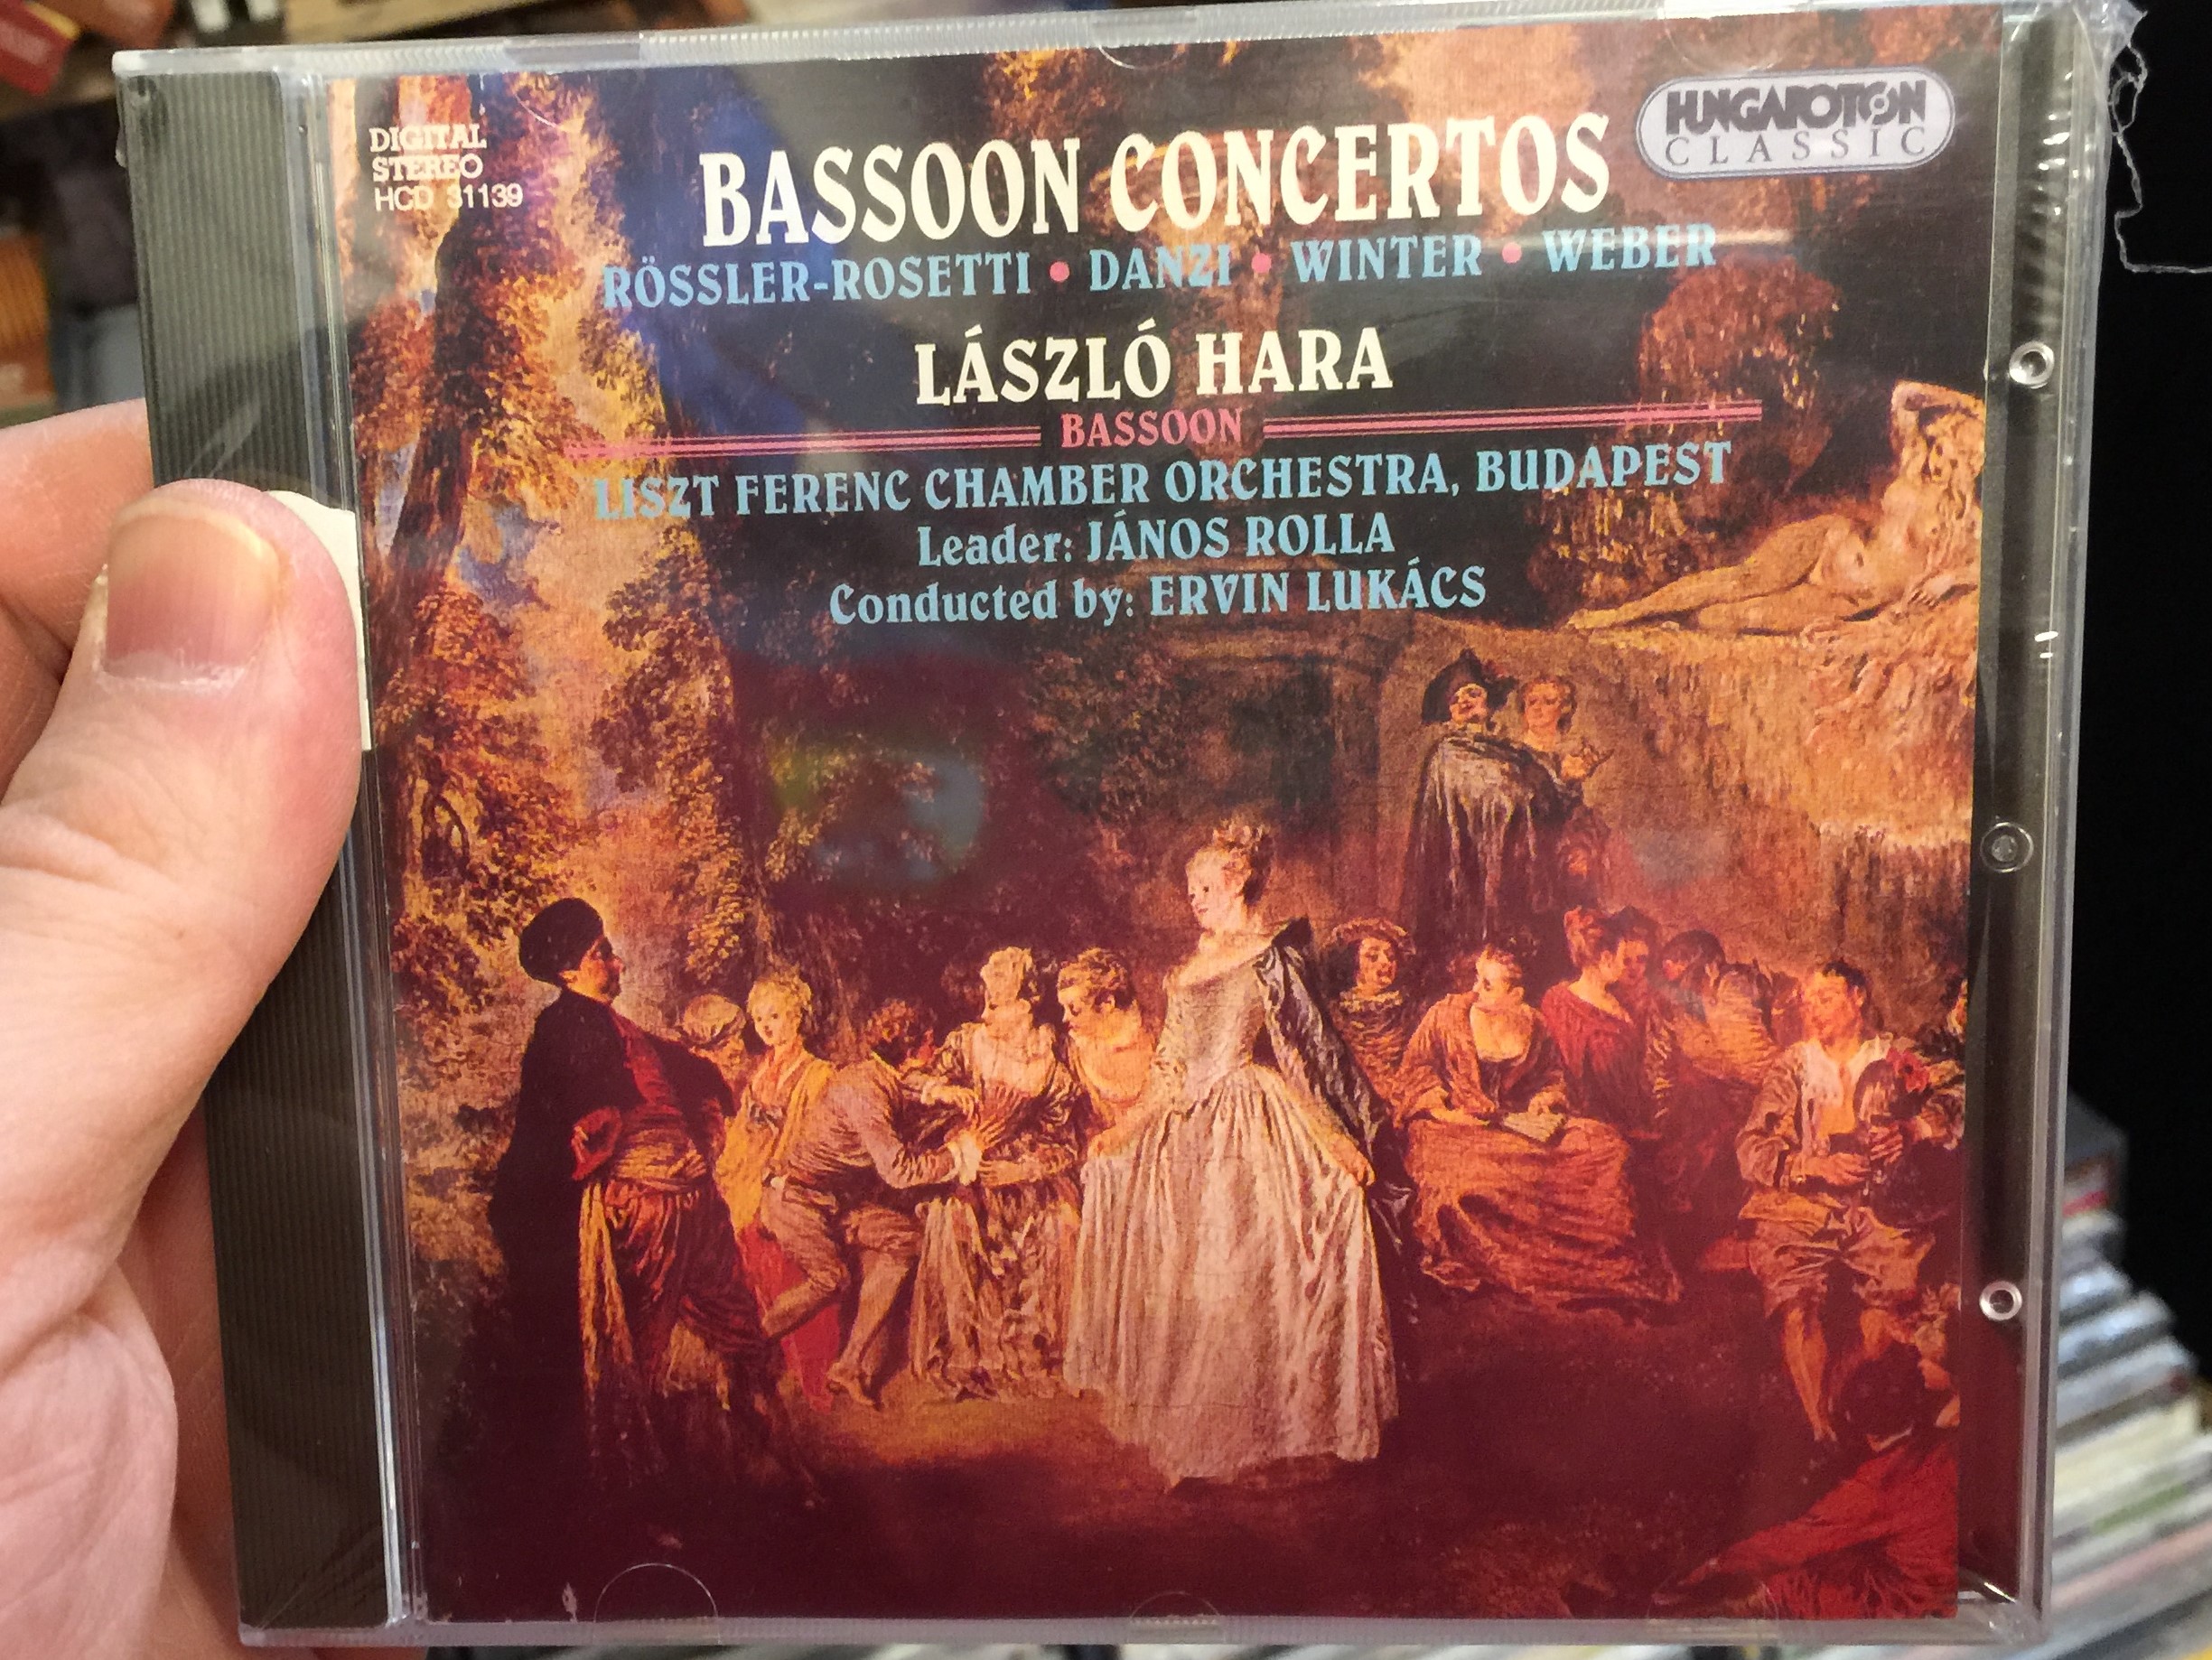 bassoon-concertos-rossler-rosetti-danzi-winter-weber-l-szl-hara-bassoon-liszt-ferenc-chamber-orchestra-budapest-leader-j-nos-rolla-conducted-by-ervin-luk-cs-hungaroton-classic-audi-1-.jpg